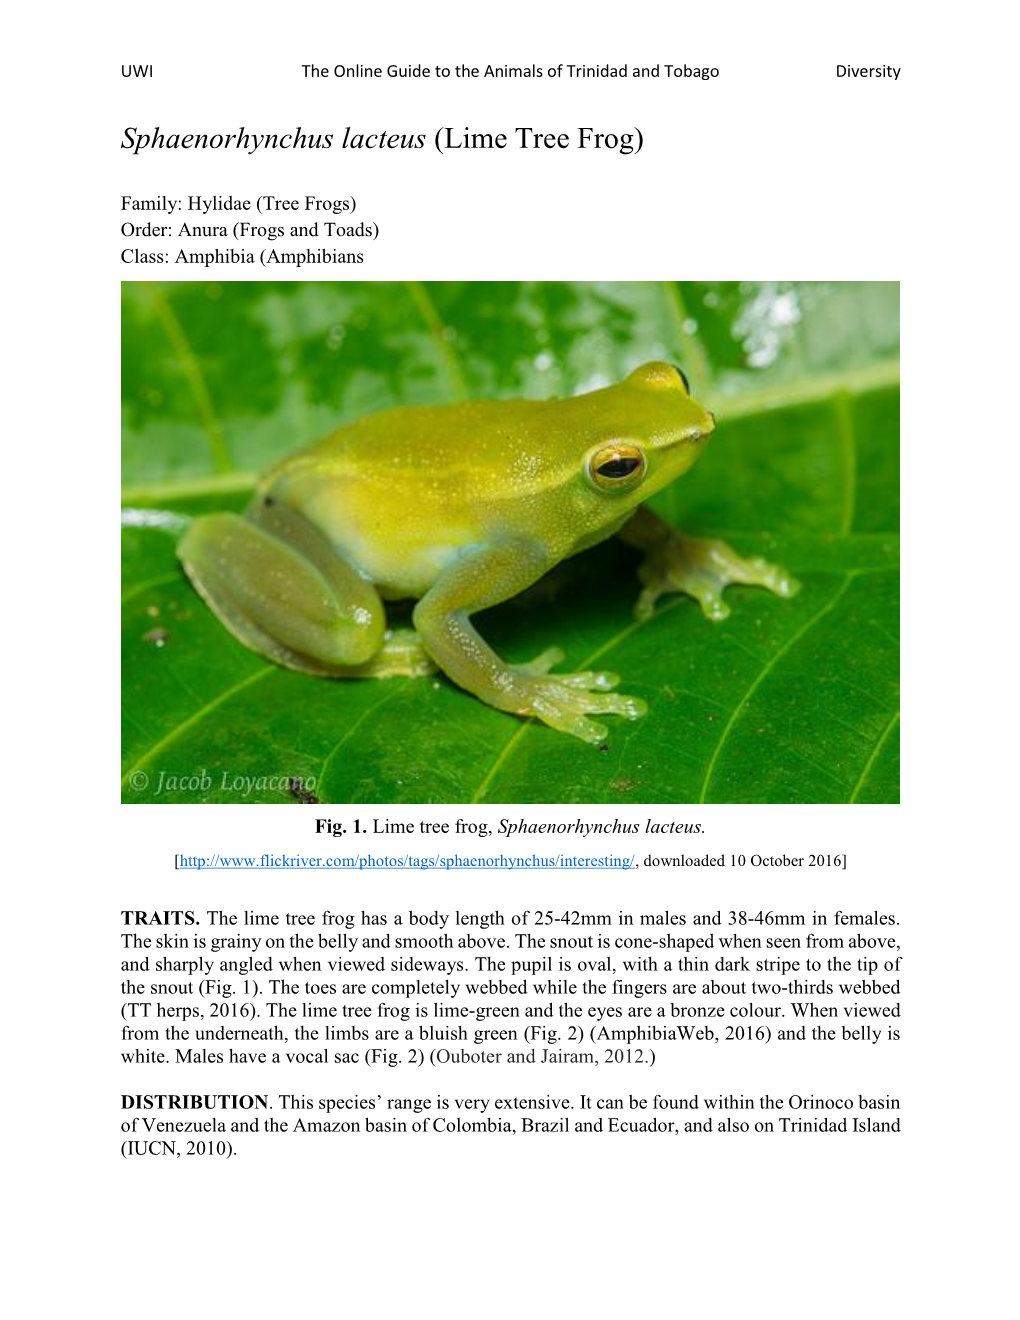 Sphaenorhynchus Lacteus (Lime Tree Frog)